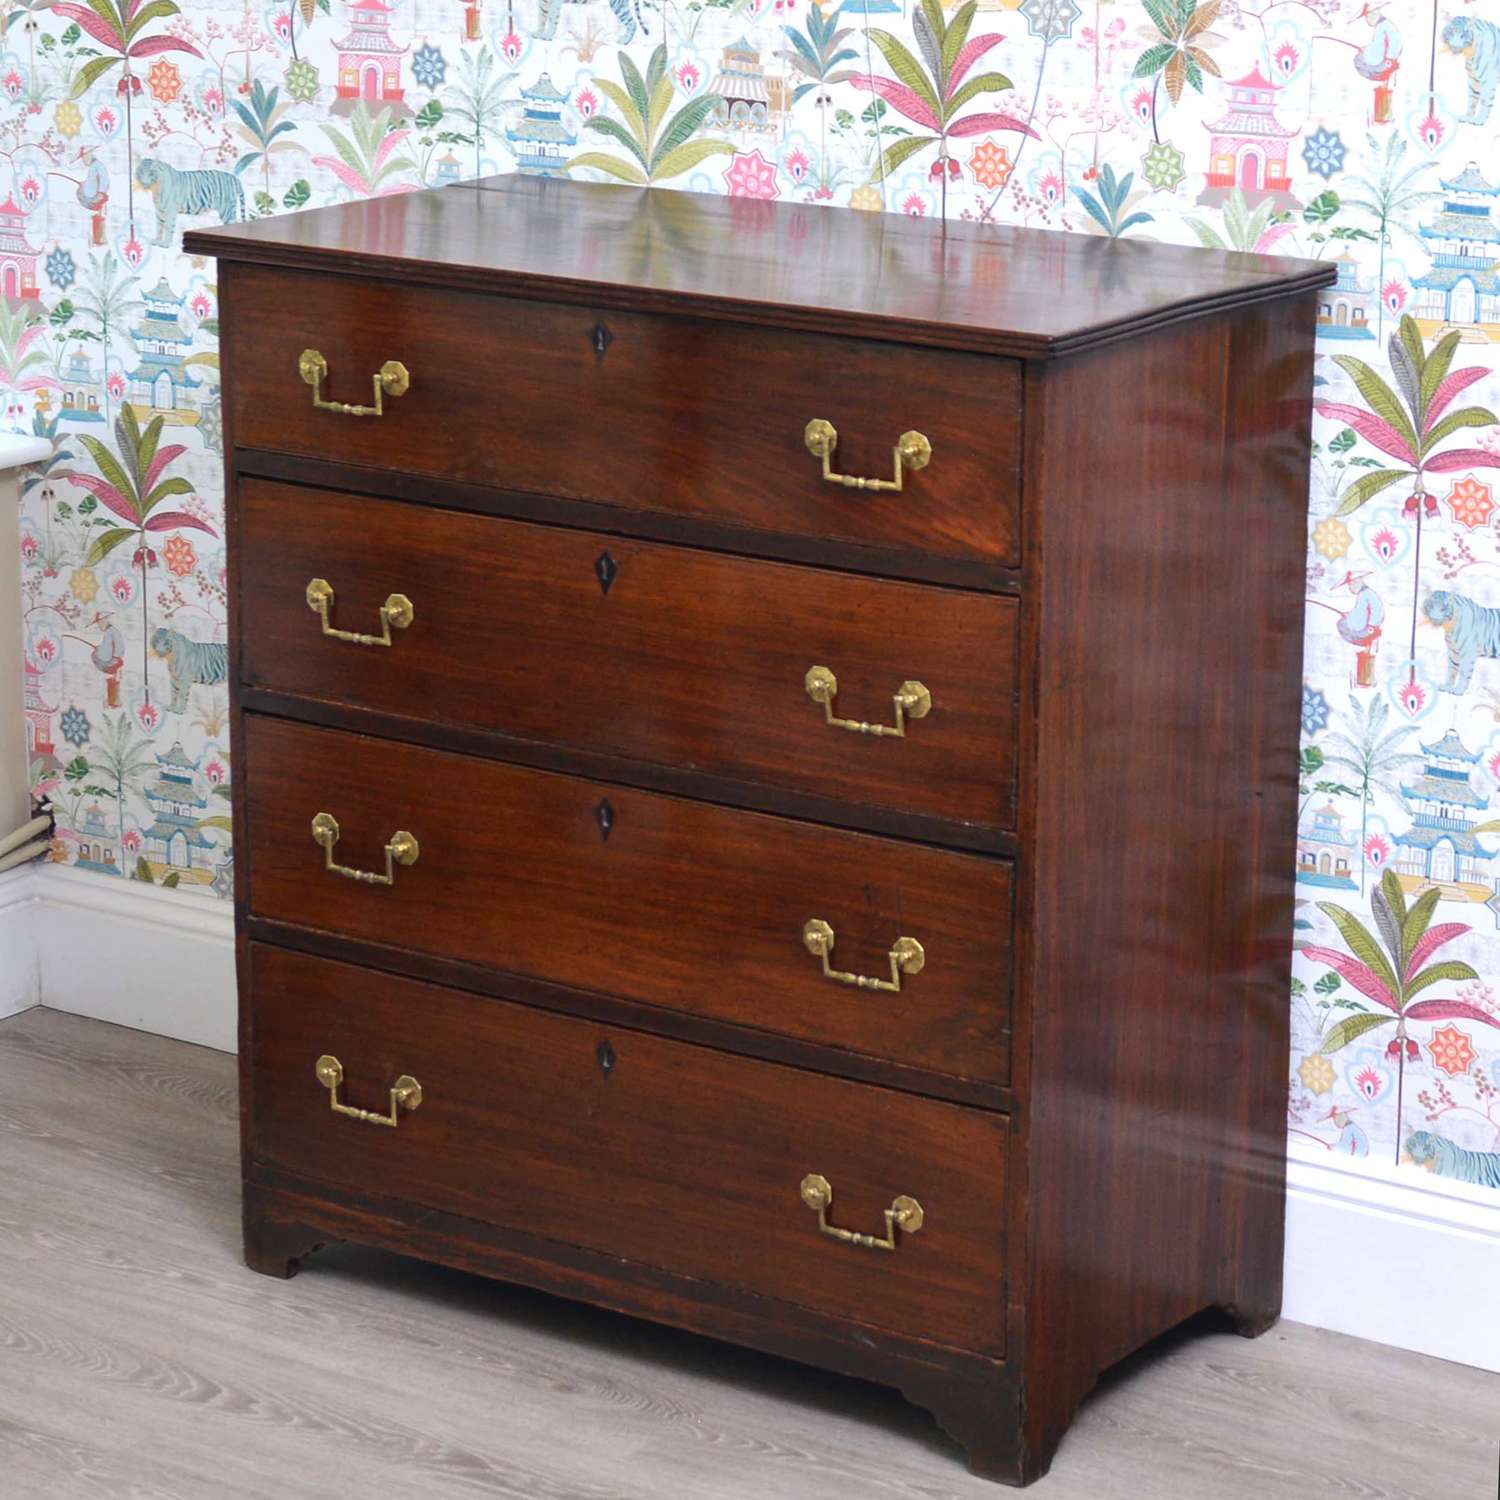 Colonial padauk wood chest of drawers